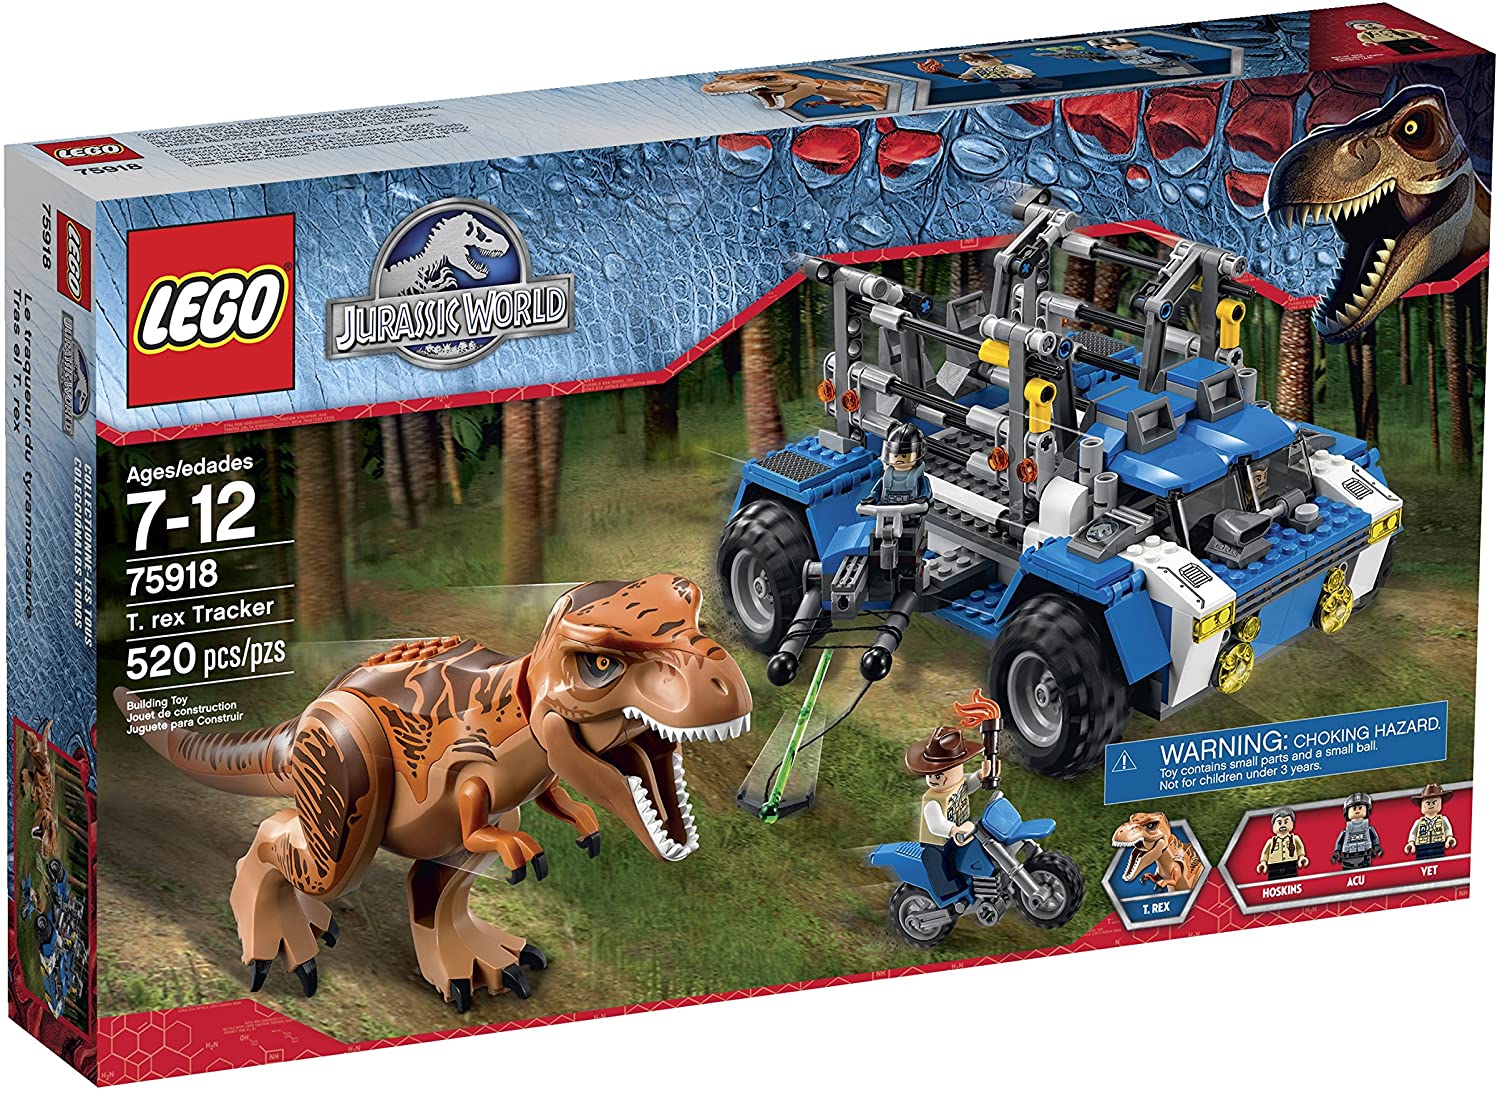 LEGO Jurassic World T. rex vs Dino-Mech Battle Set 75938 - US